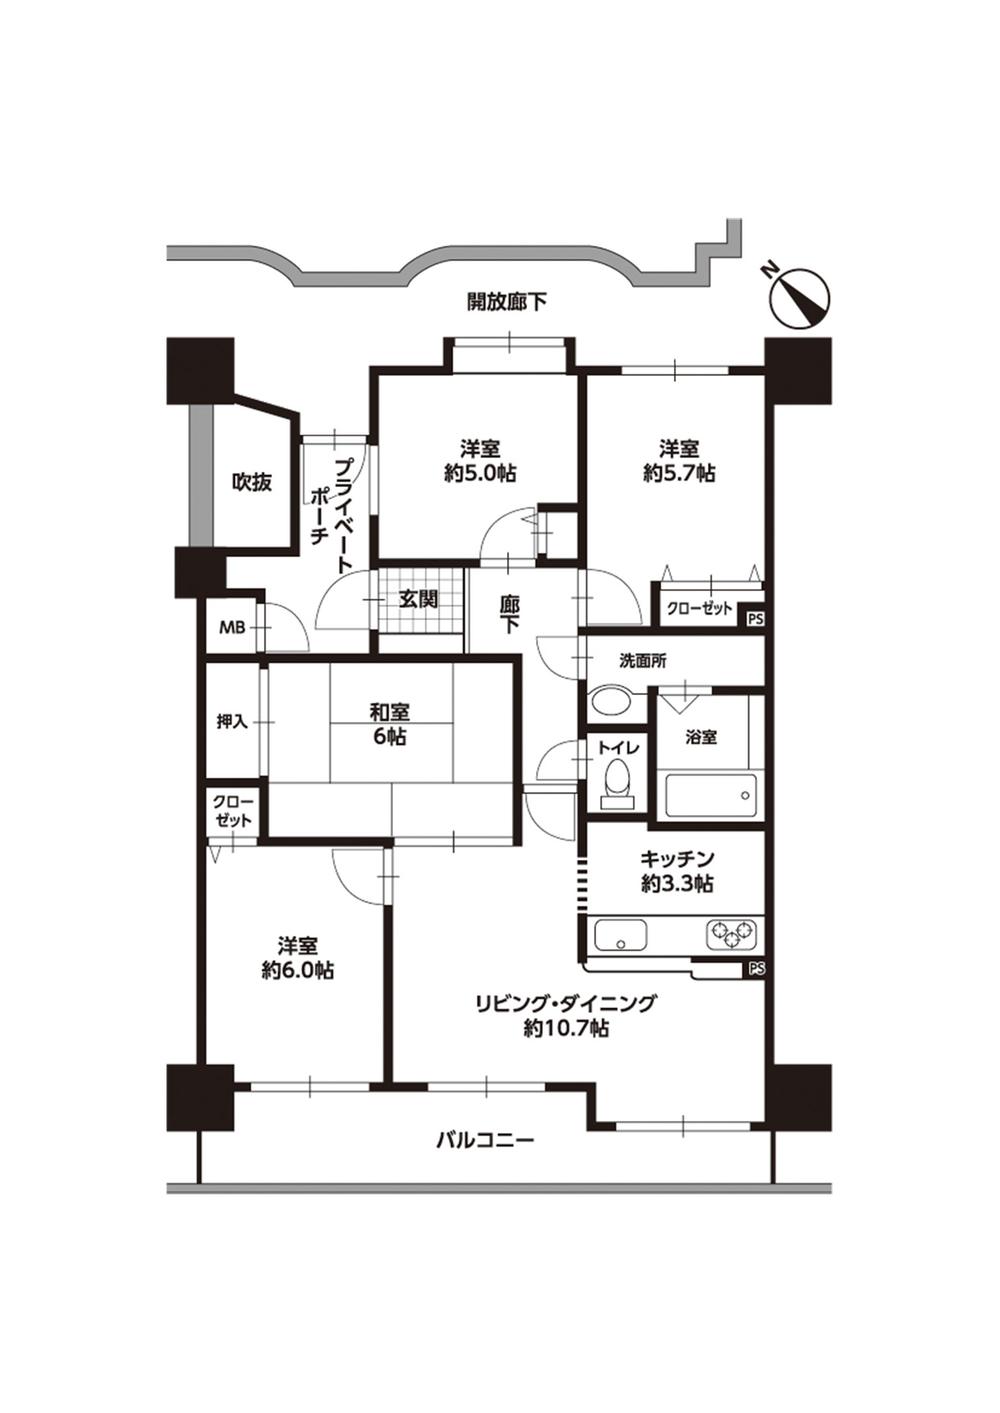 Floor plan. 4LDK, Price 18.3 million yen, Occupied area 73.72 sq m , Balcony area 10.2 sq m